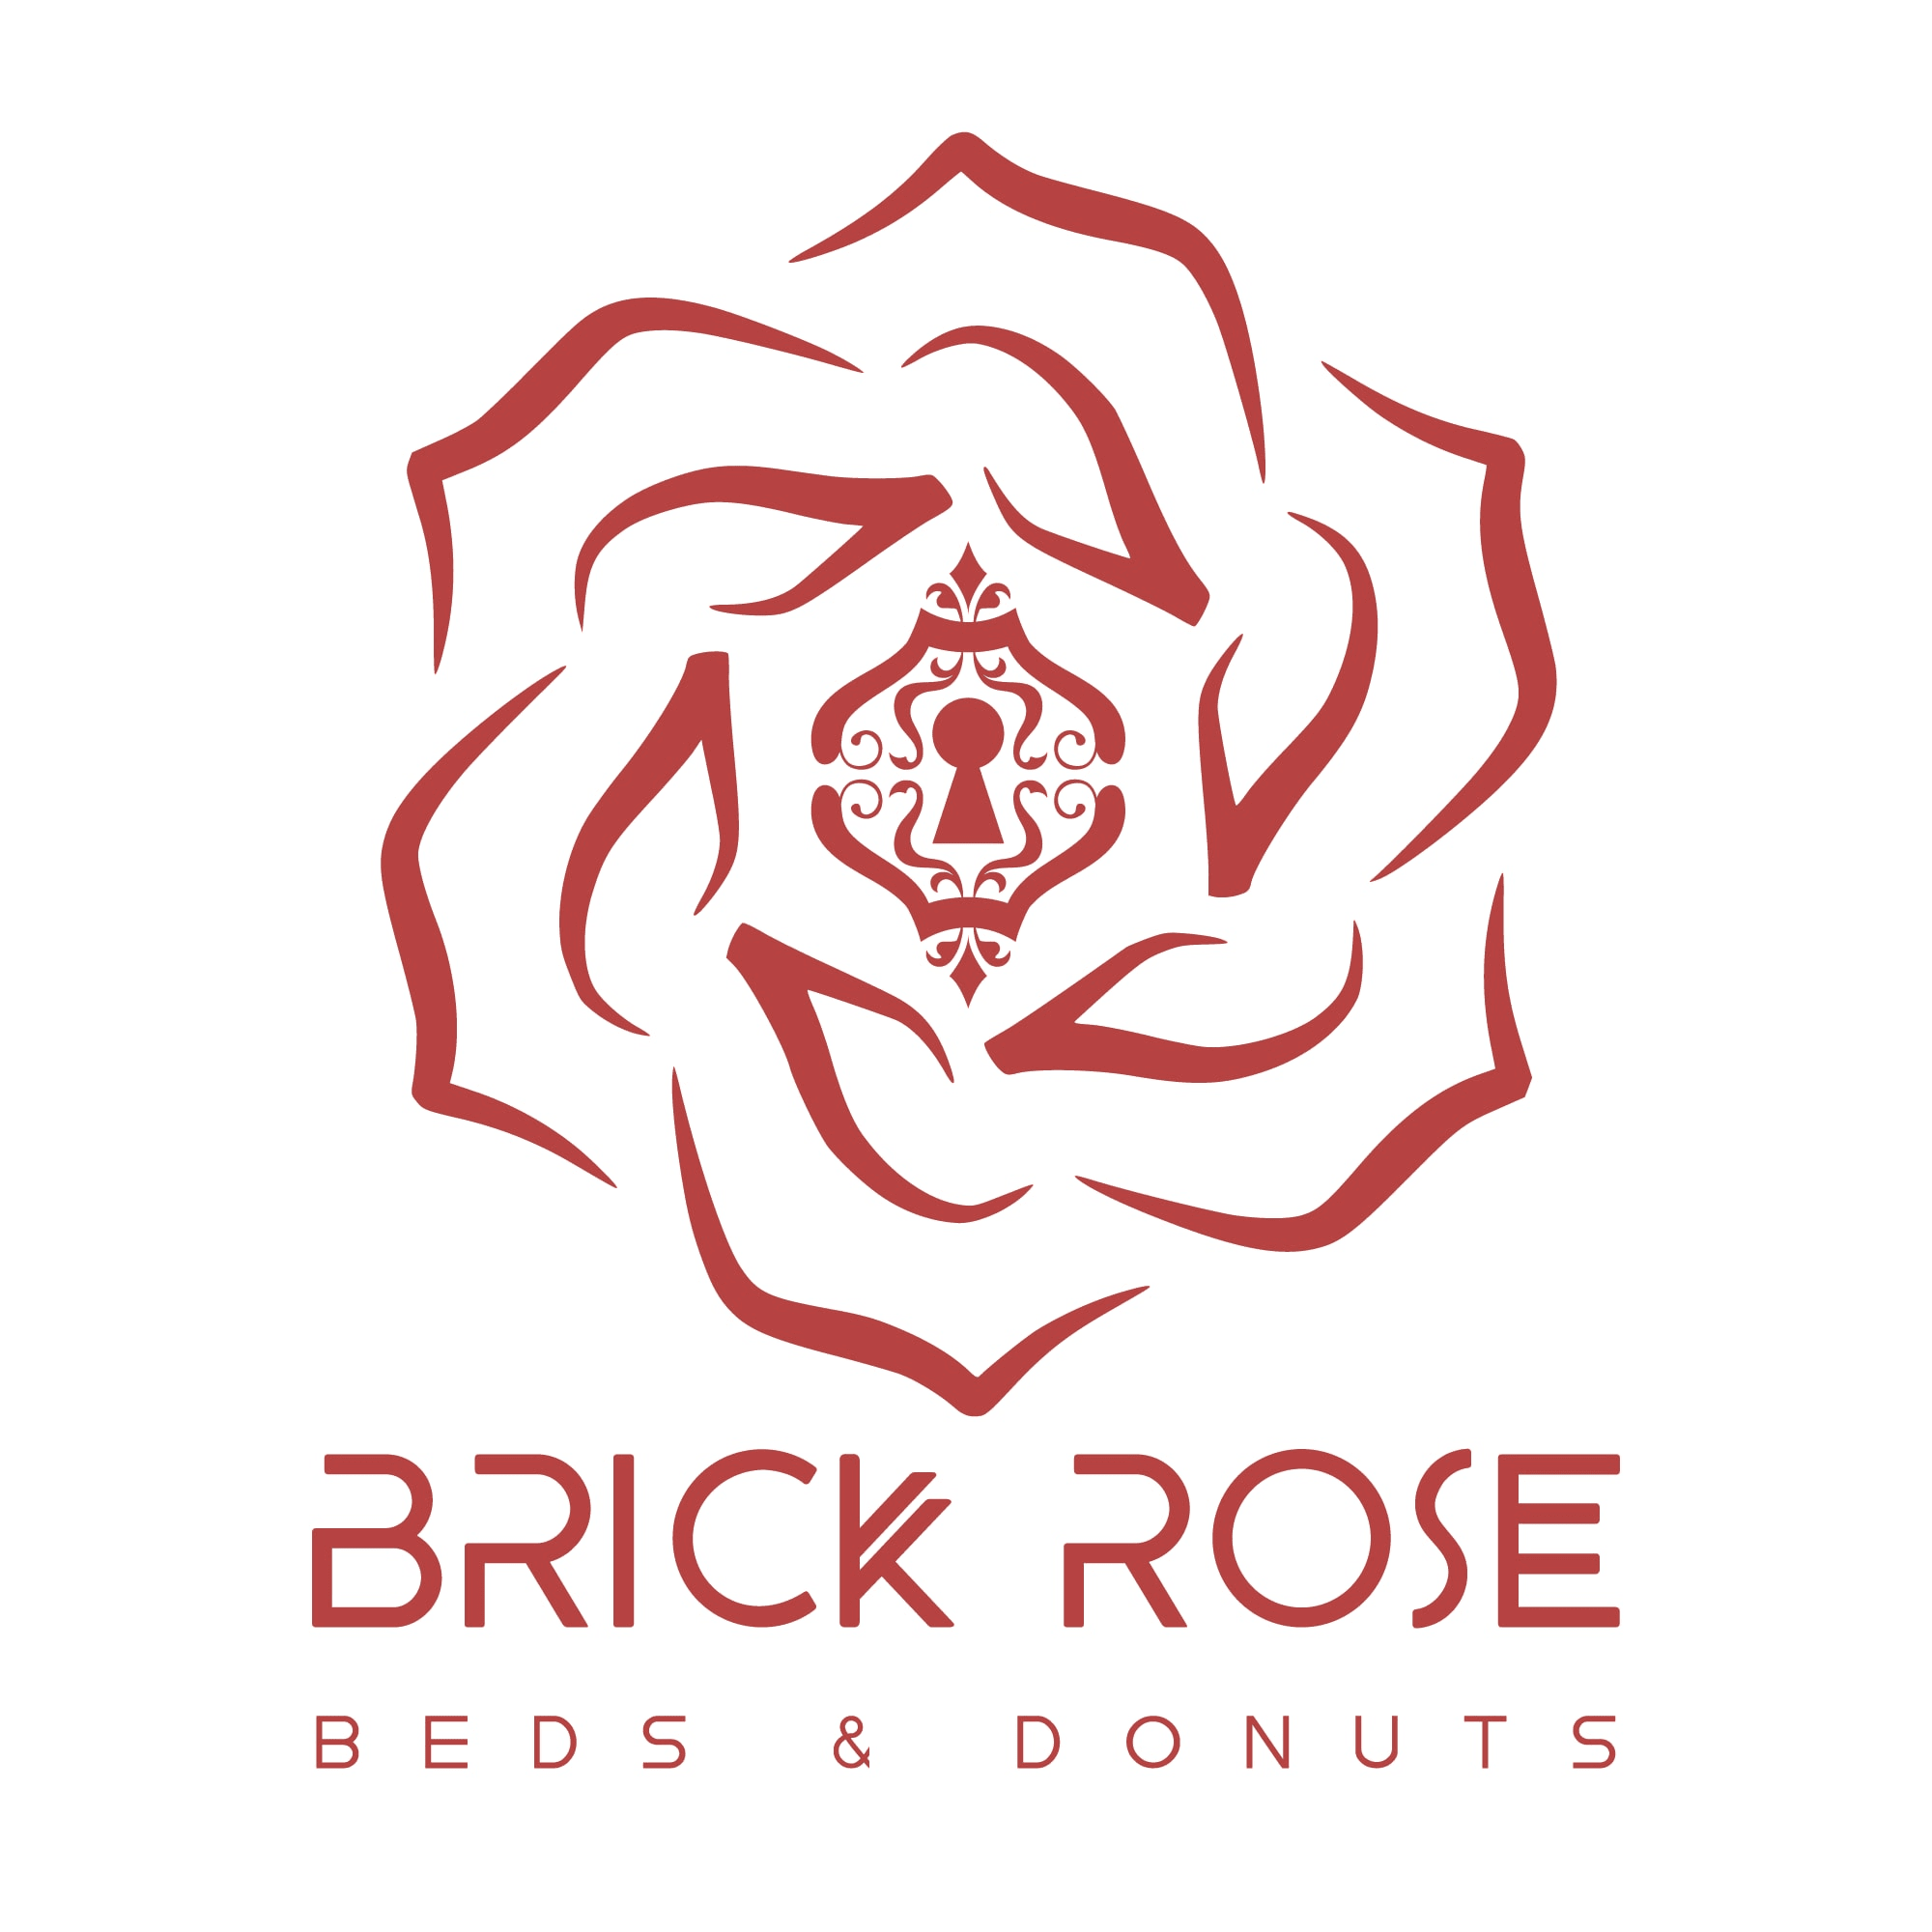 Brick Rose Beds & Donuts